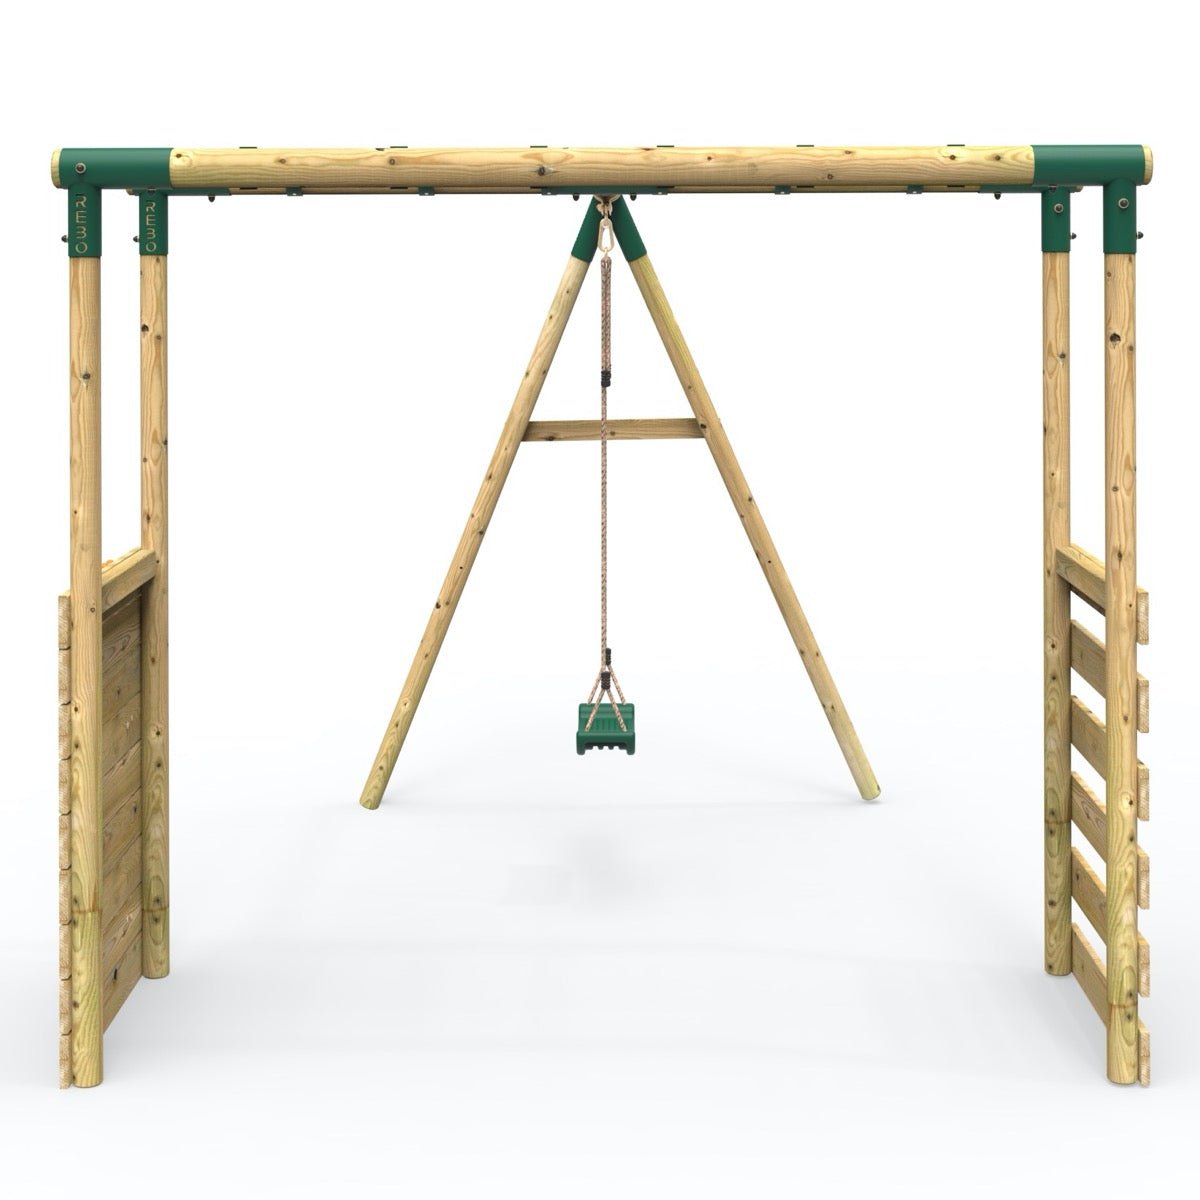 Rebo Wooden Garden Swing Set with Extra-Long Monkey Bars - Solar Green